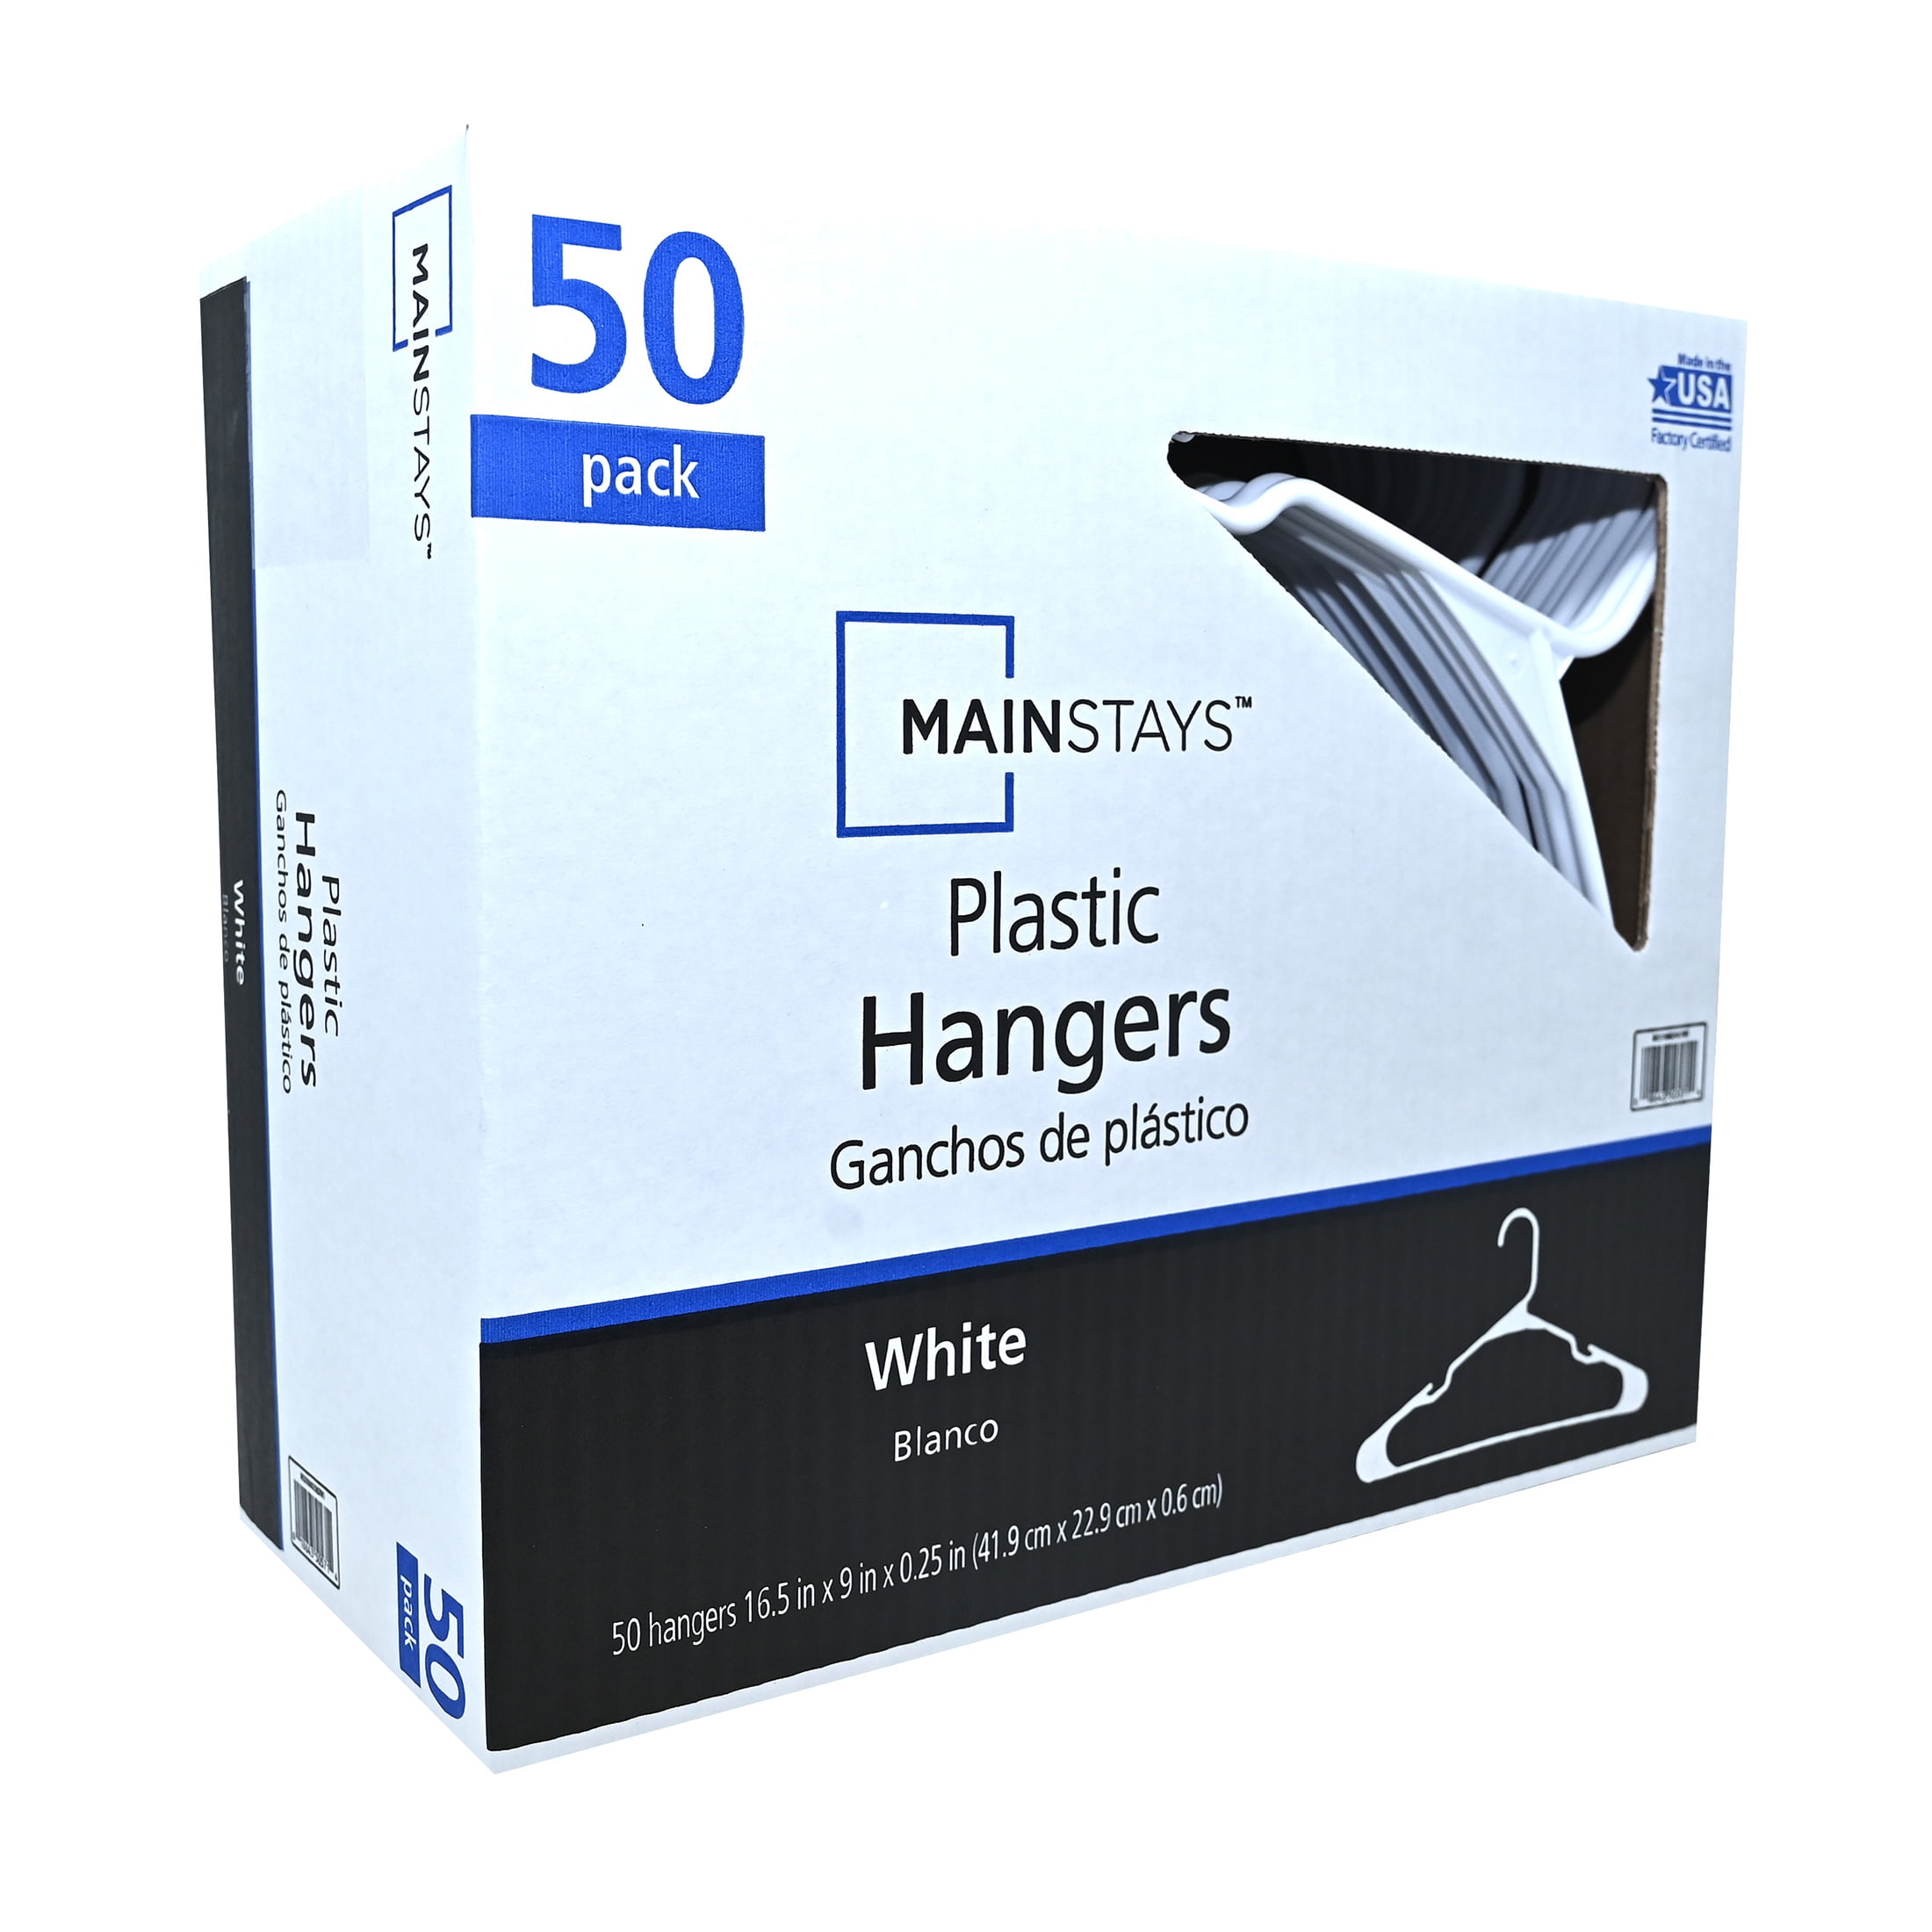 Mainstay Childrens Hangers 40 Piece White USA ma40han